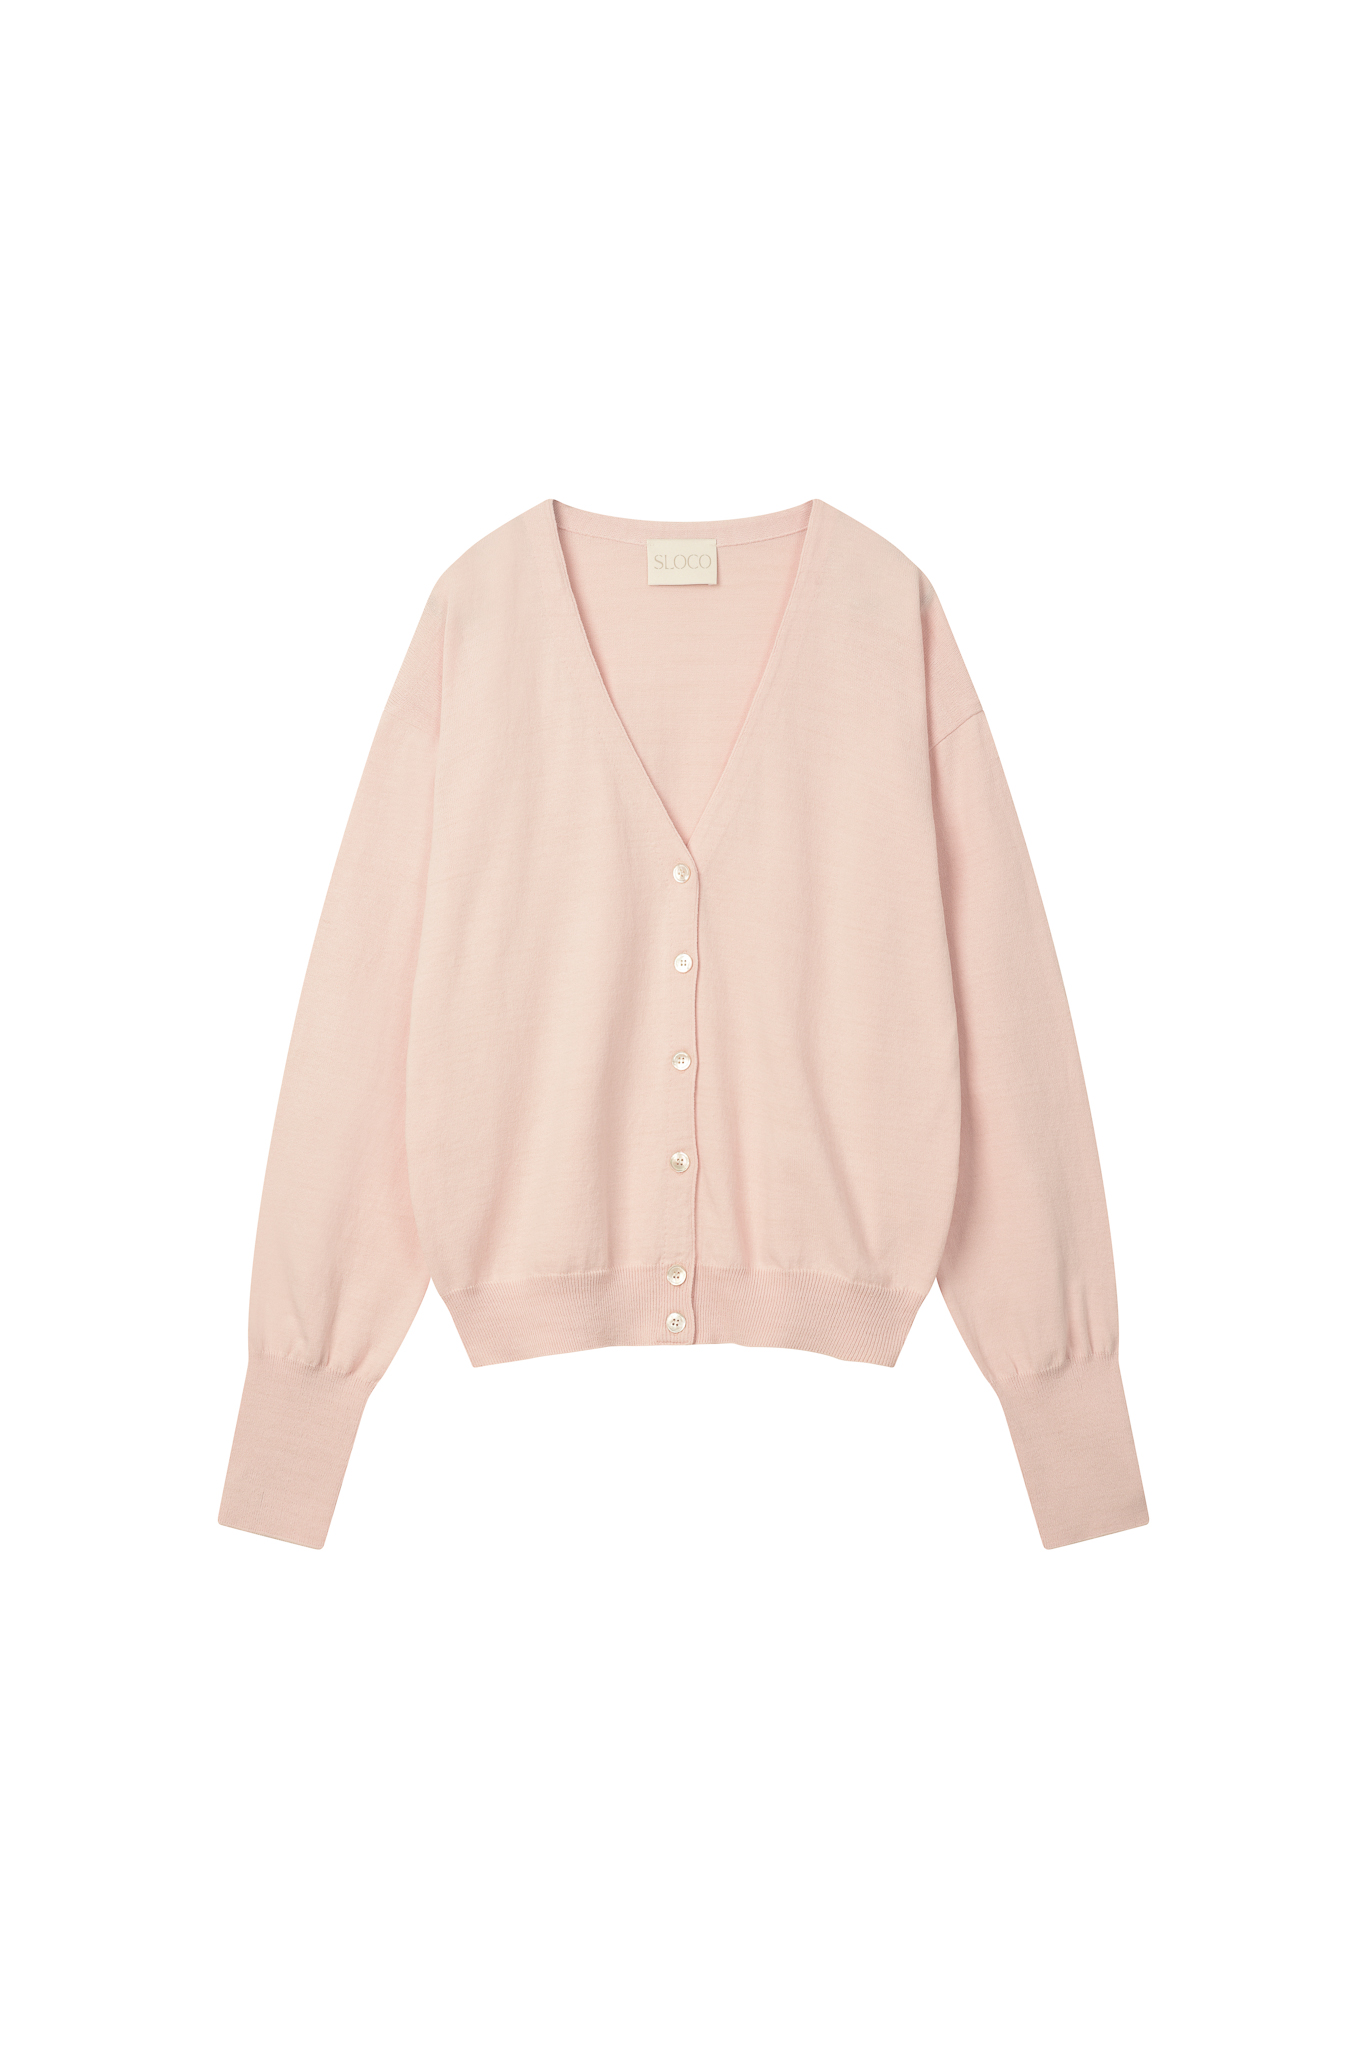 [SLOCO] Cotton v neck cardigan, light pink